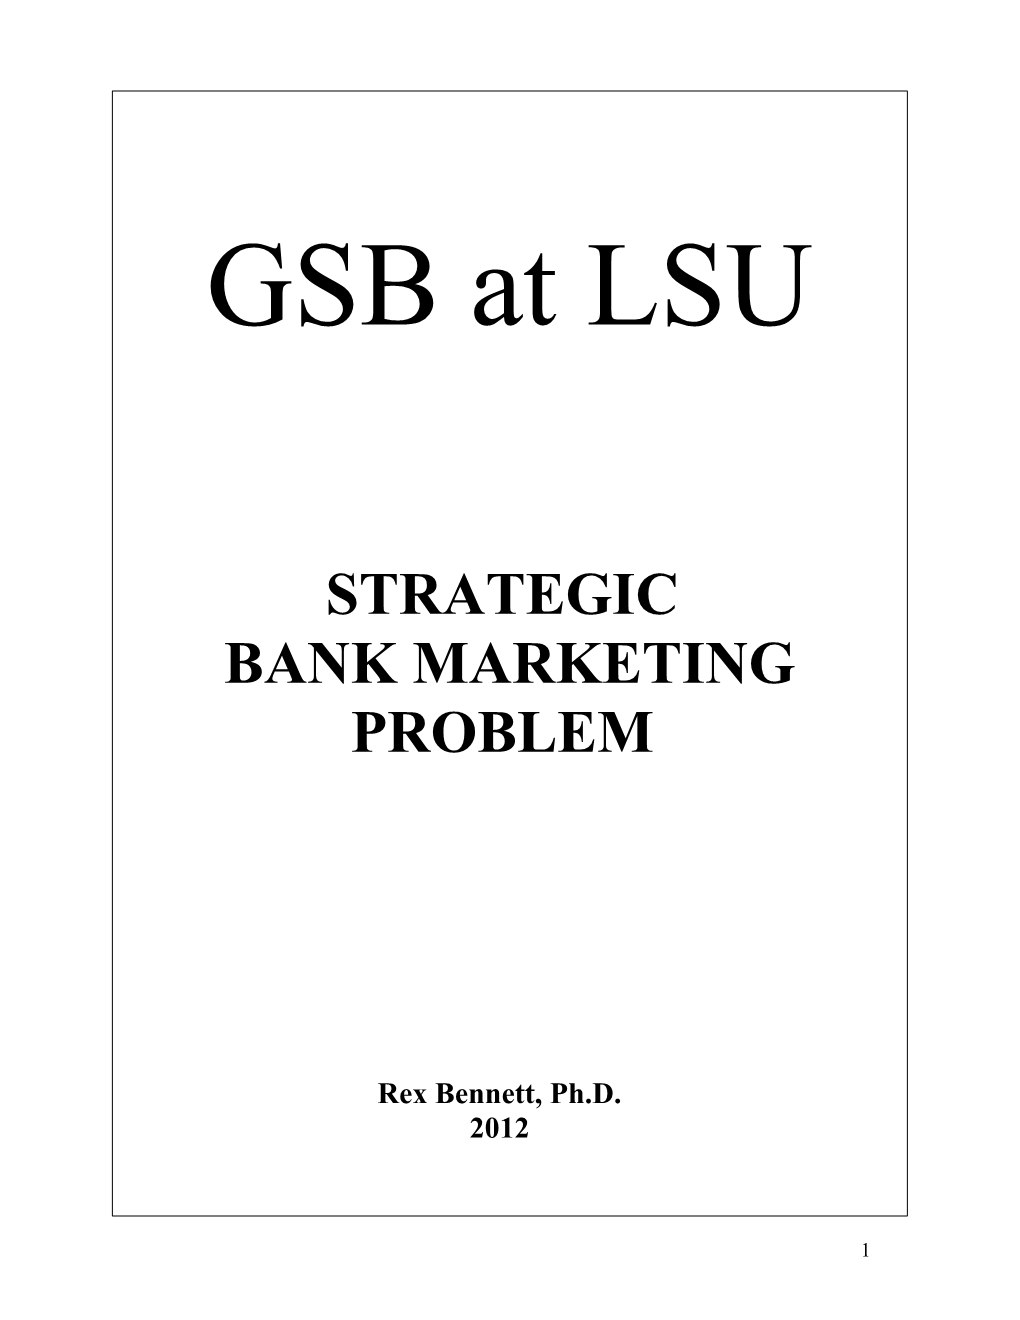 Strategic Marketing Problem